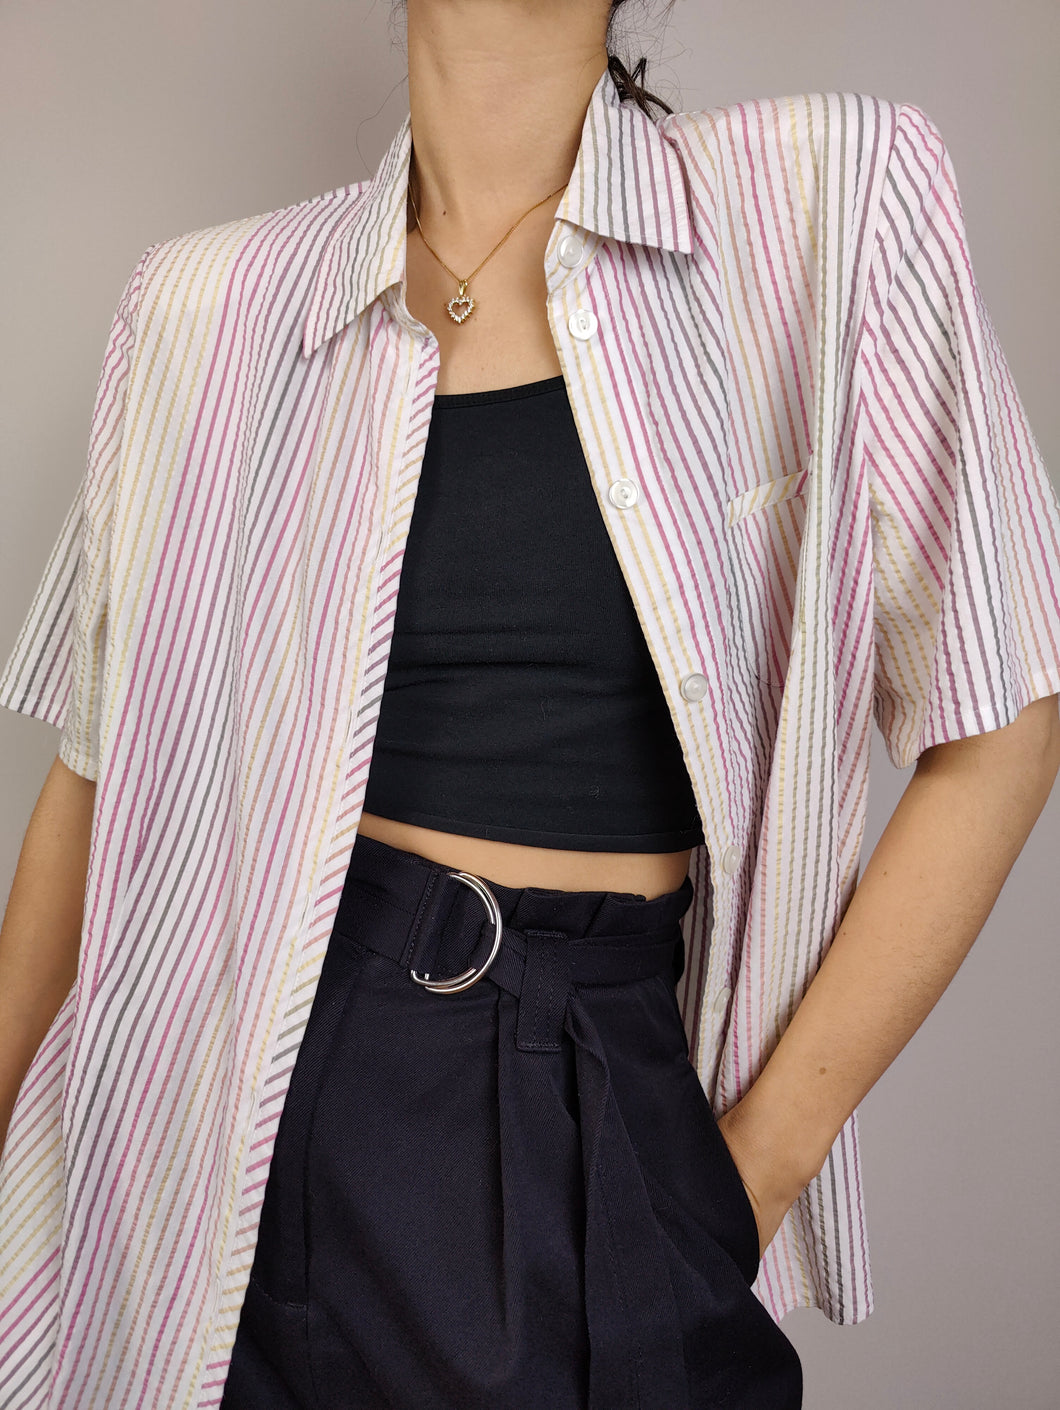 The White Pink Stripe Shirt | Vintage blouse rainbow stripes pattern short sleeve woman women ladies 40 M